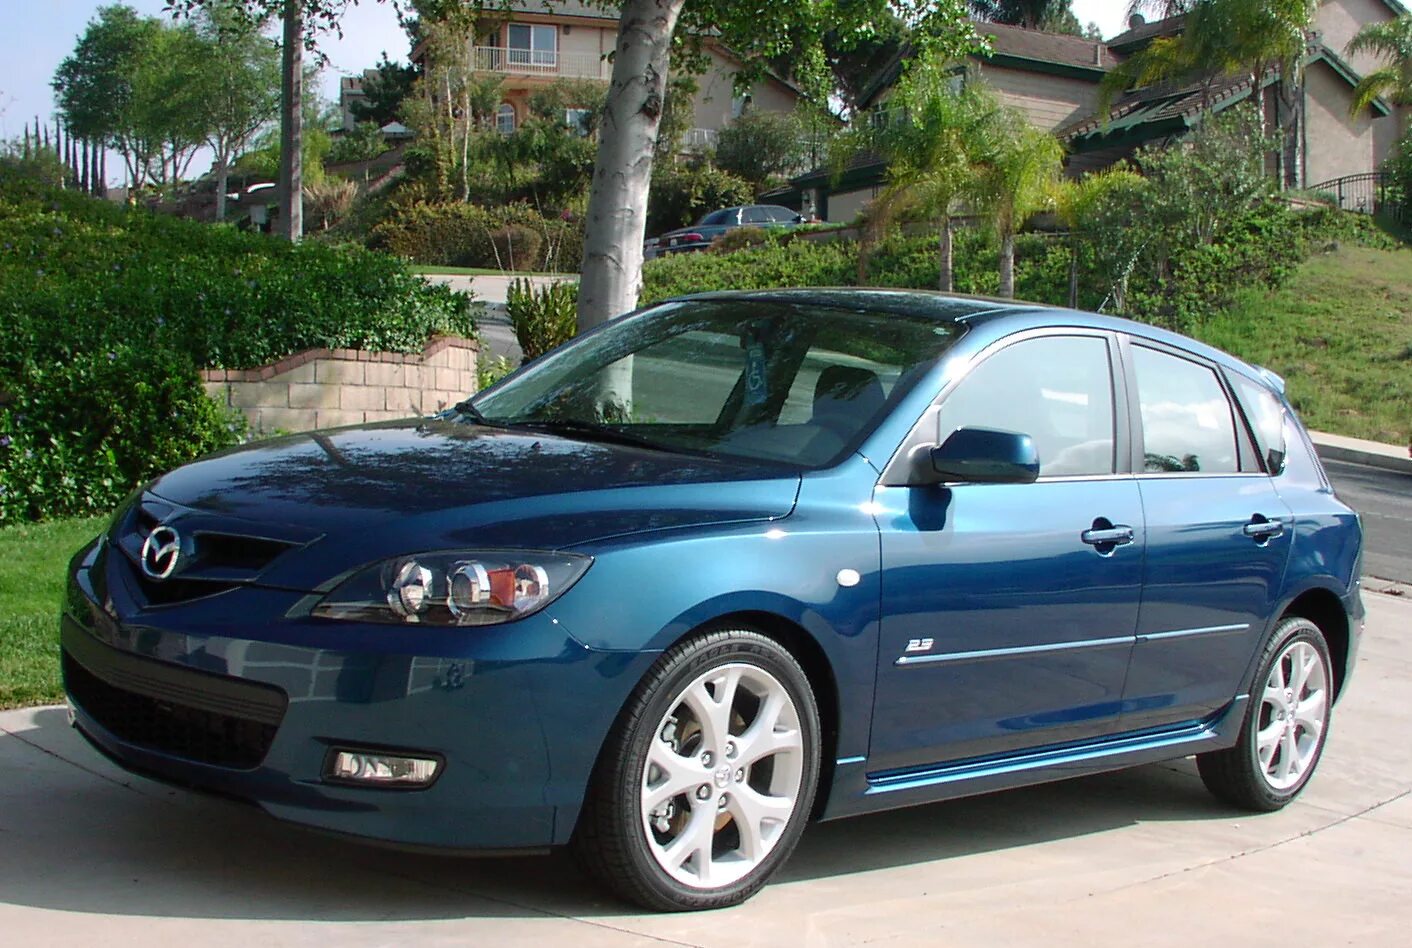 Мазда 3 бк 2006 год. Mazda 3 2007. Mazda 3 2007 хэтчбек. Мазда 3 2007 хэтчбек 1.6. Мазда 3 седан 2007.